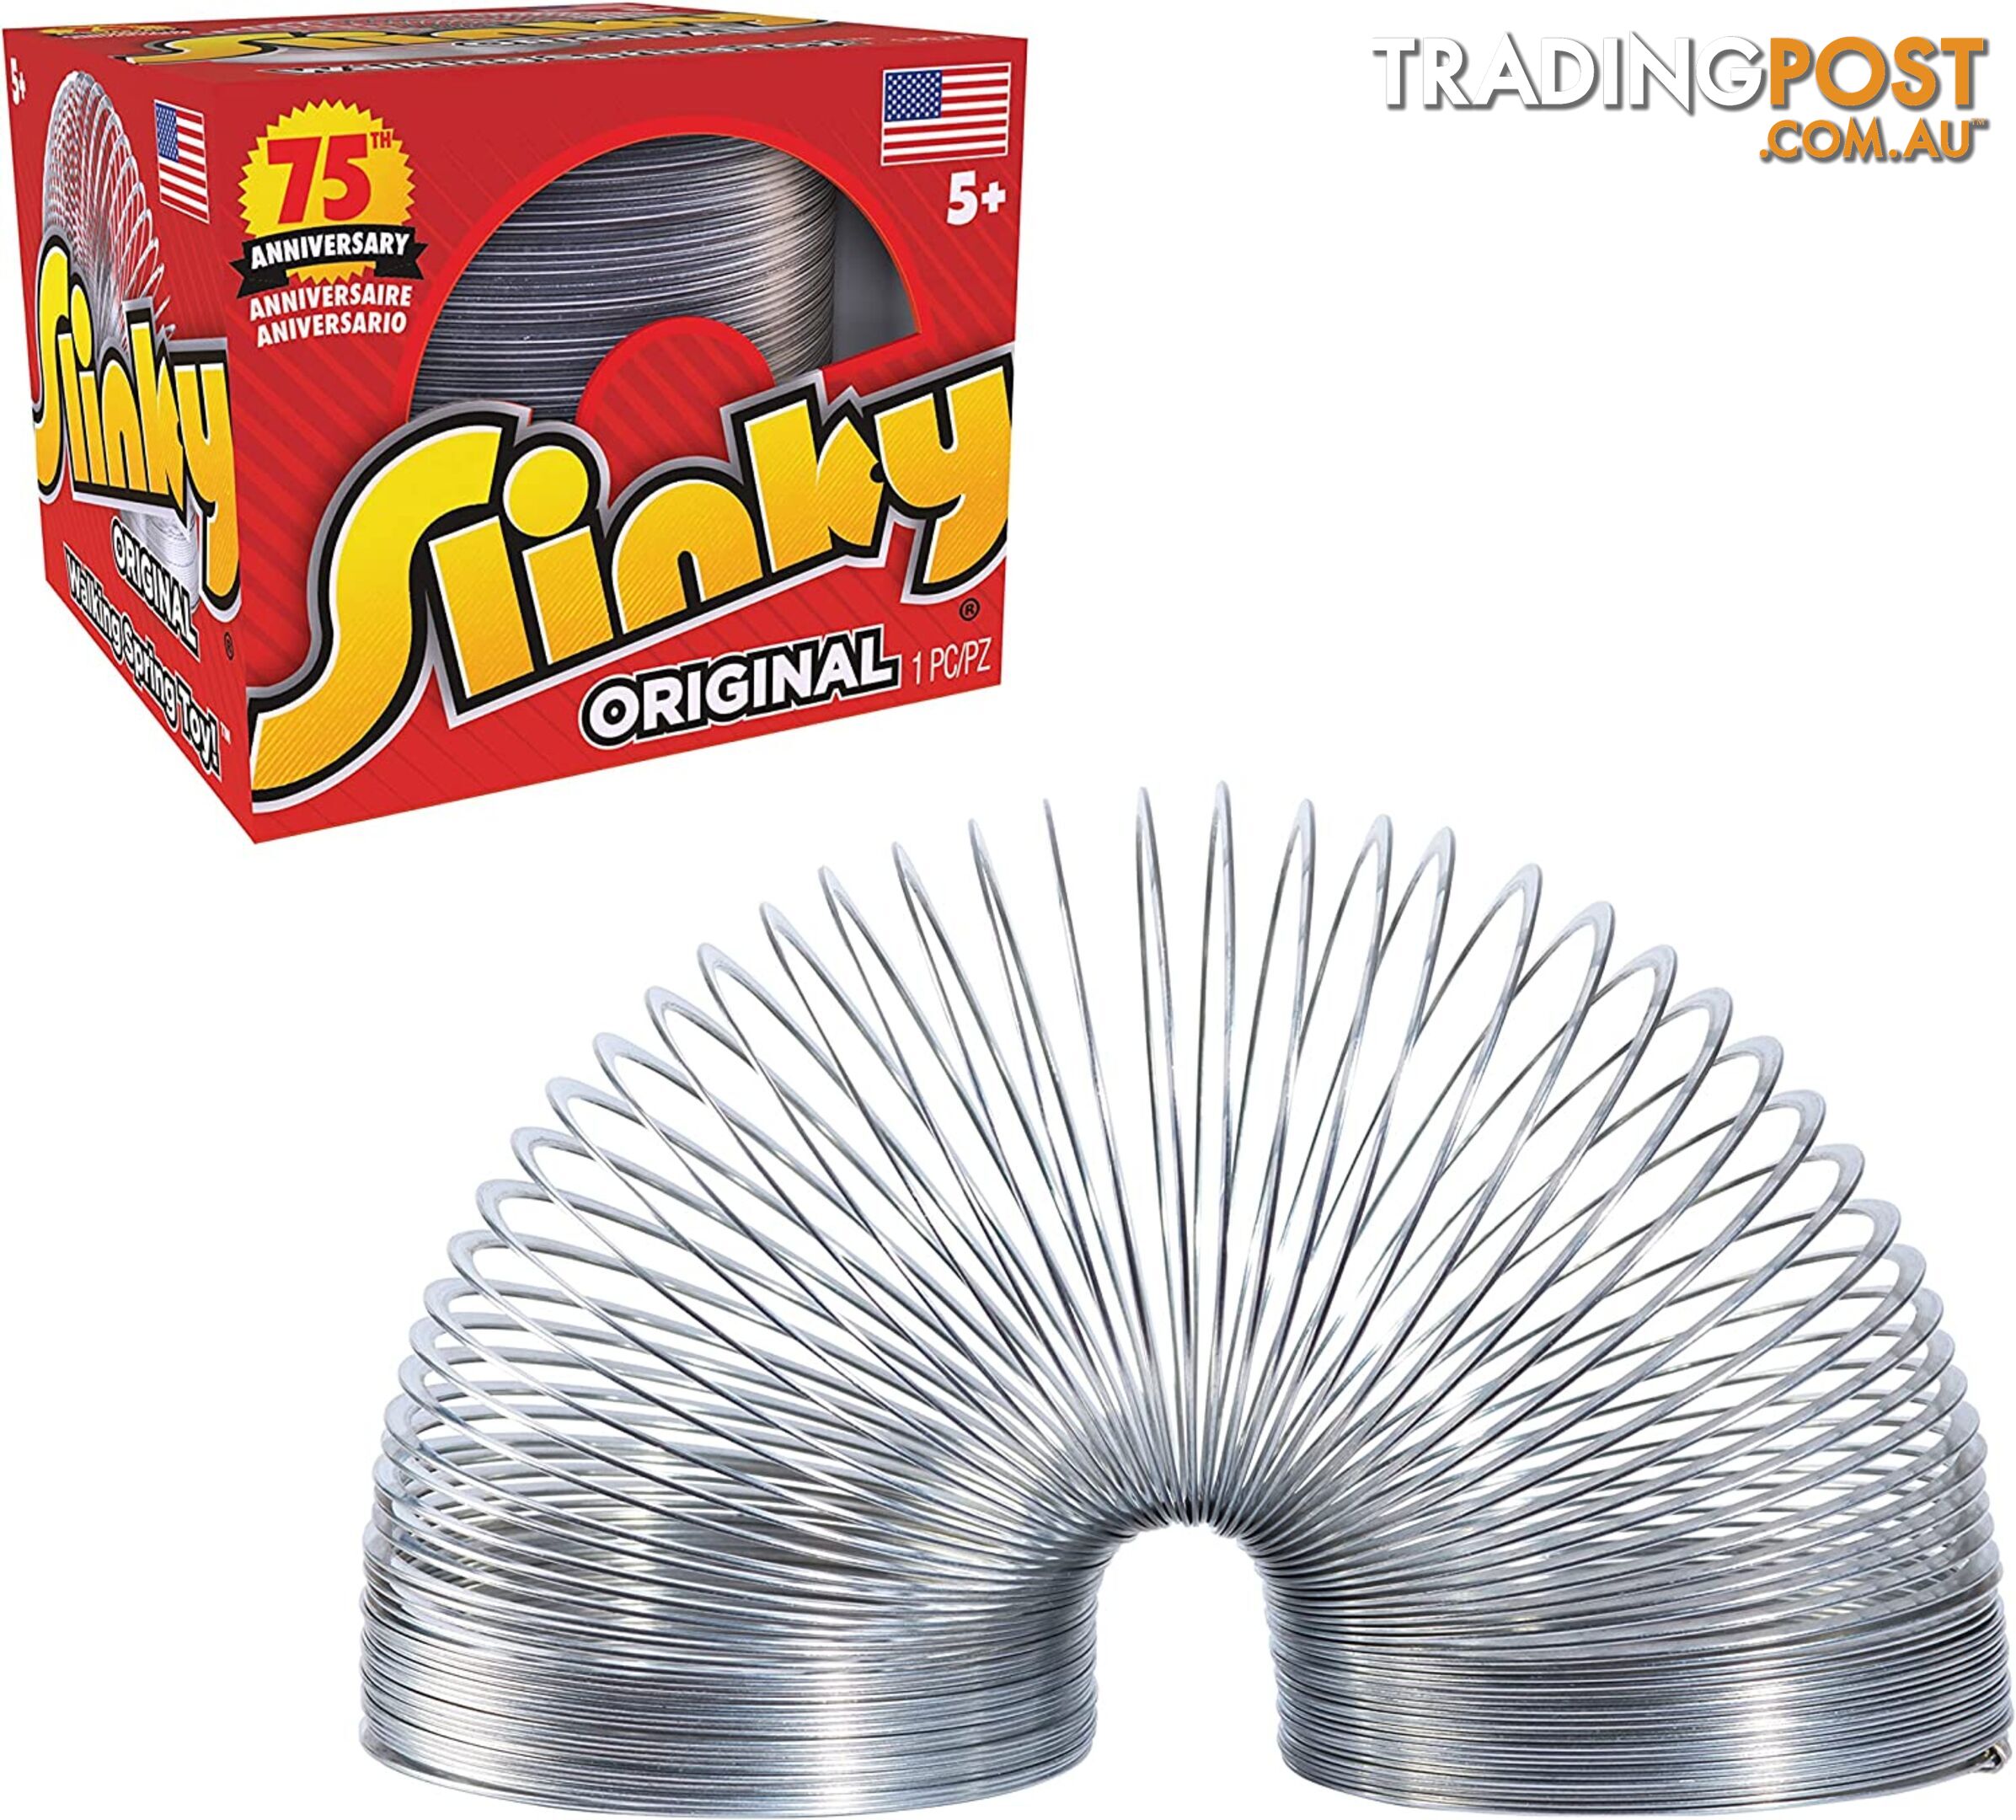 Slinky Original Classic  Metal - Bj03101 - 886144031014